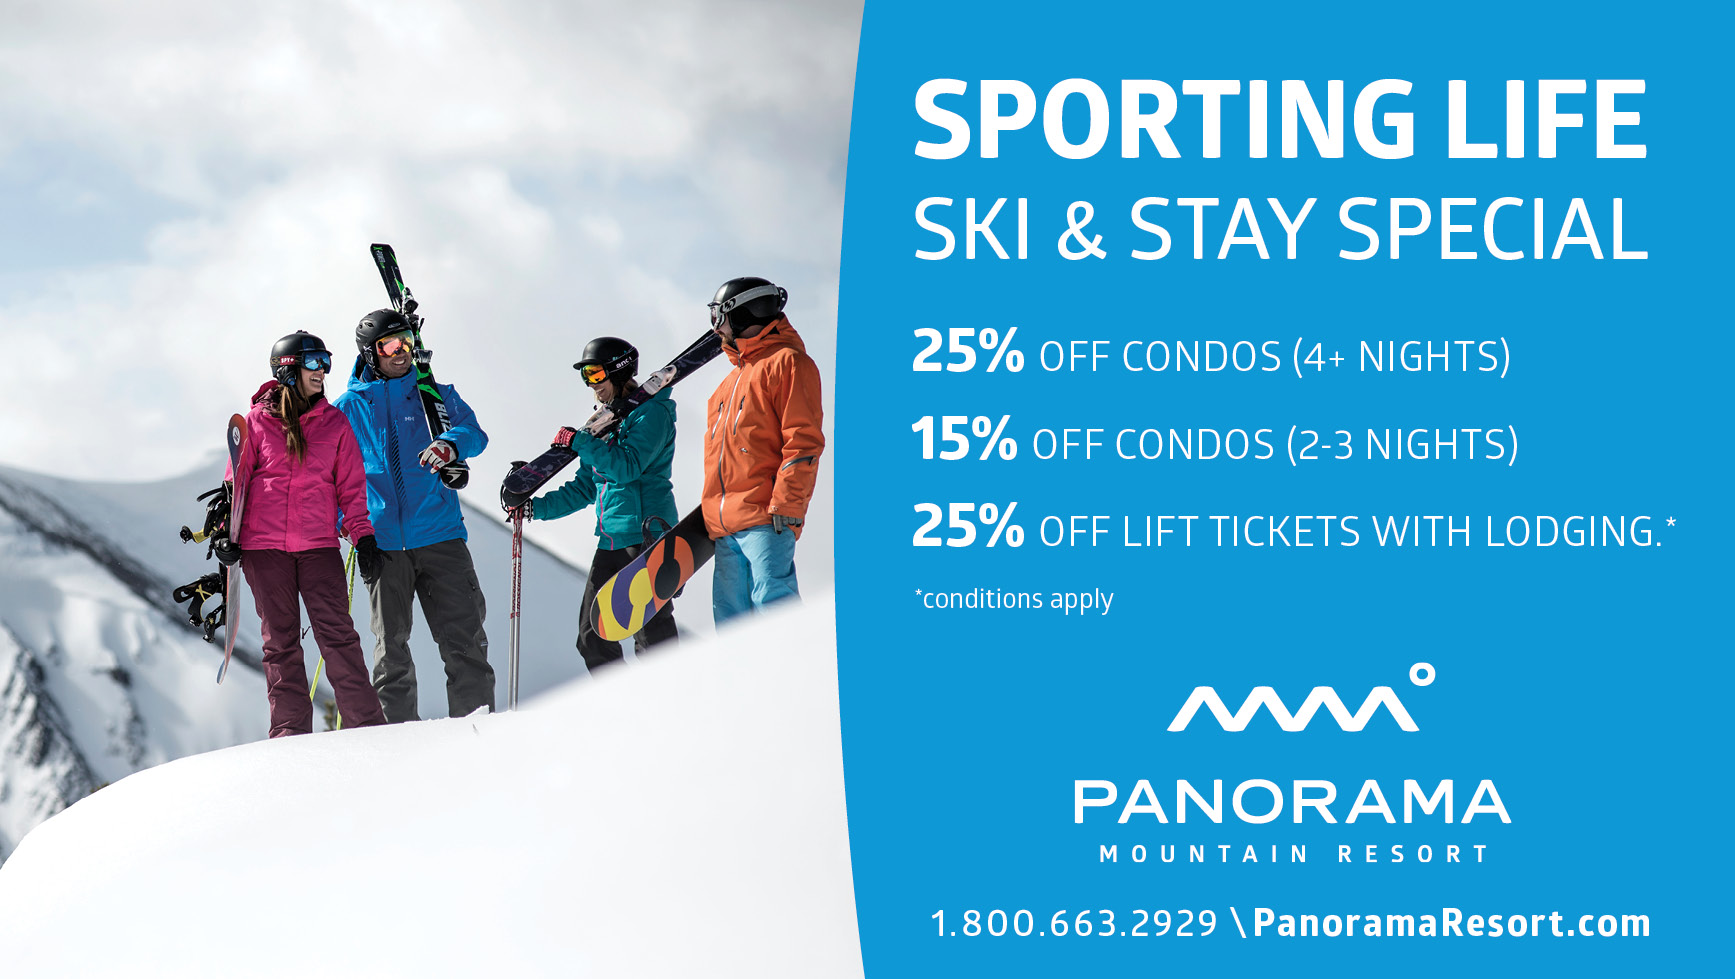 Panorama Resort Ski & Stay Special